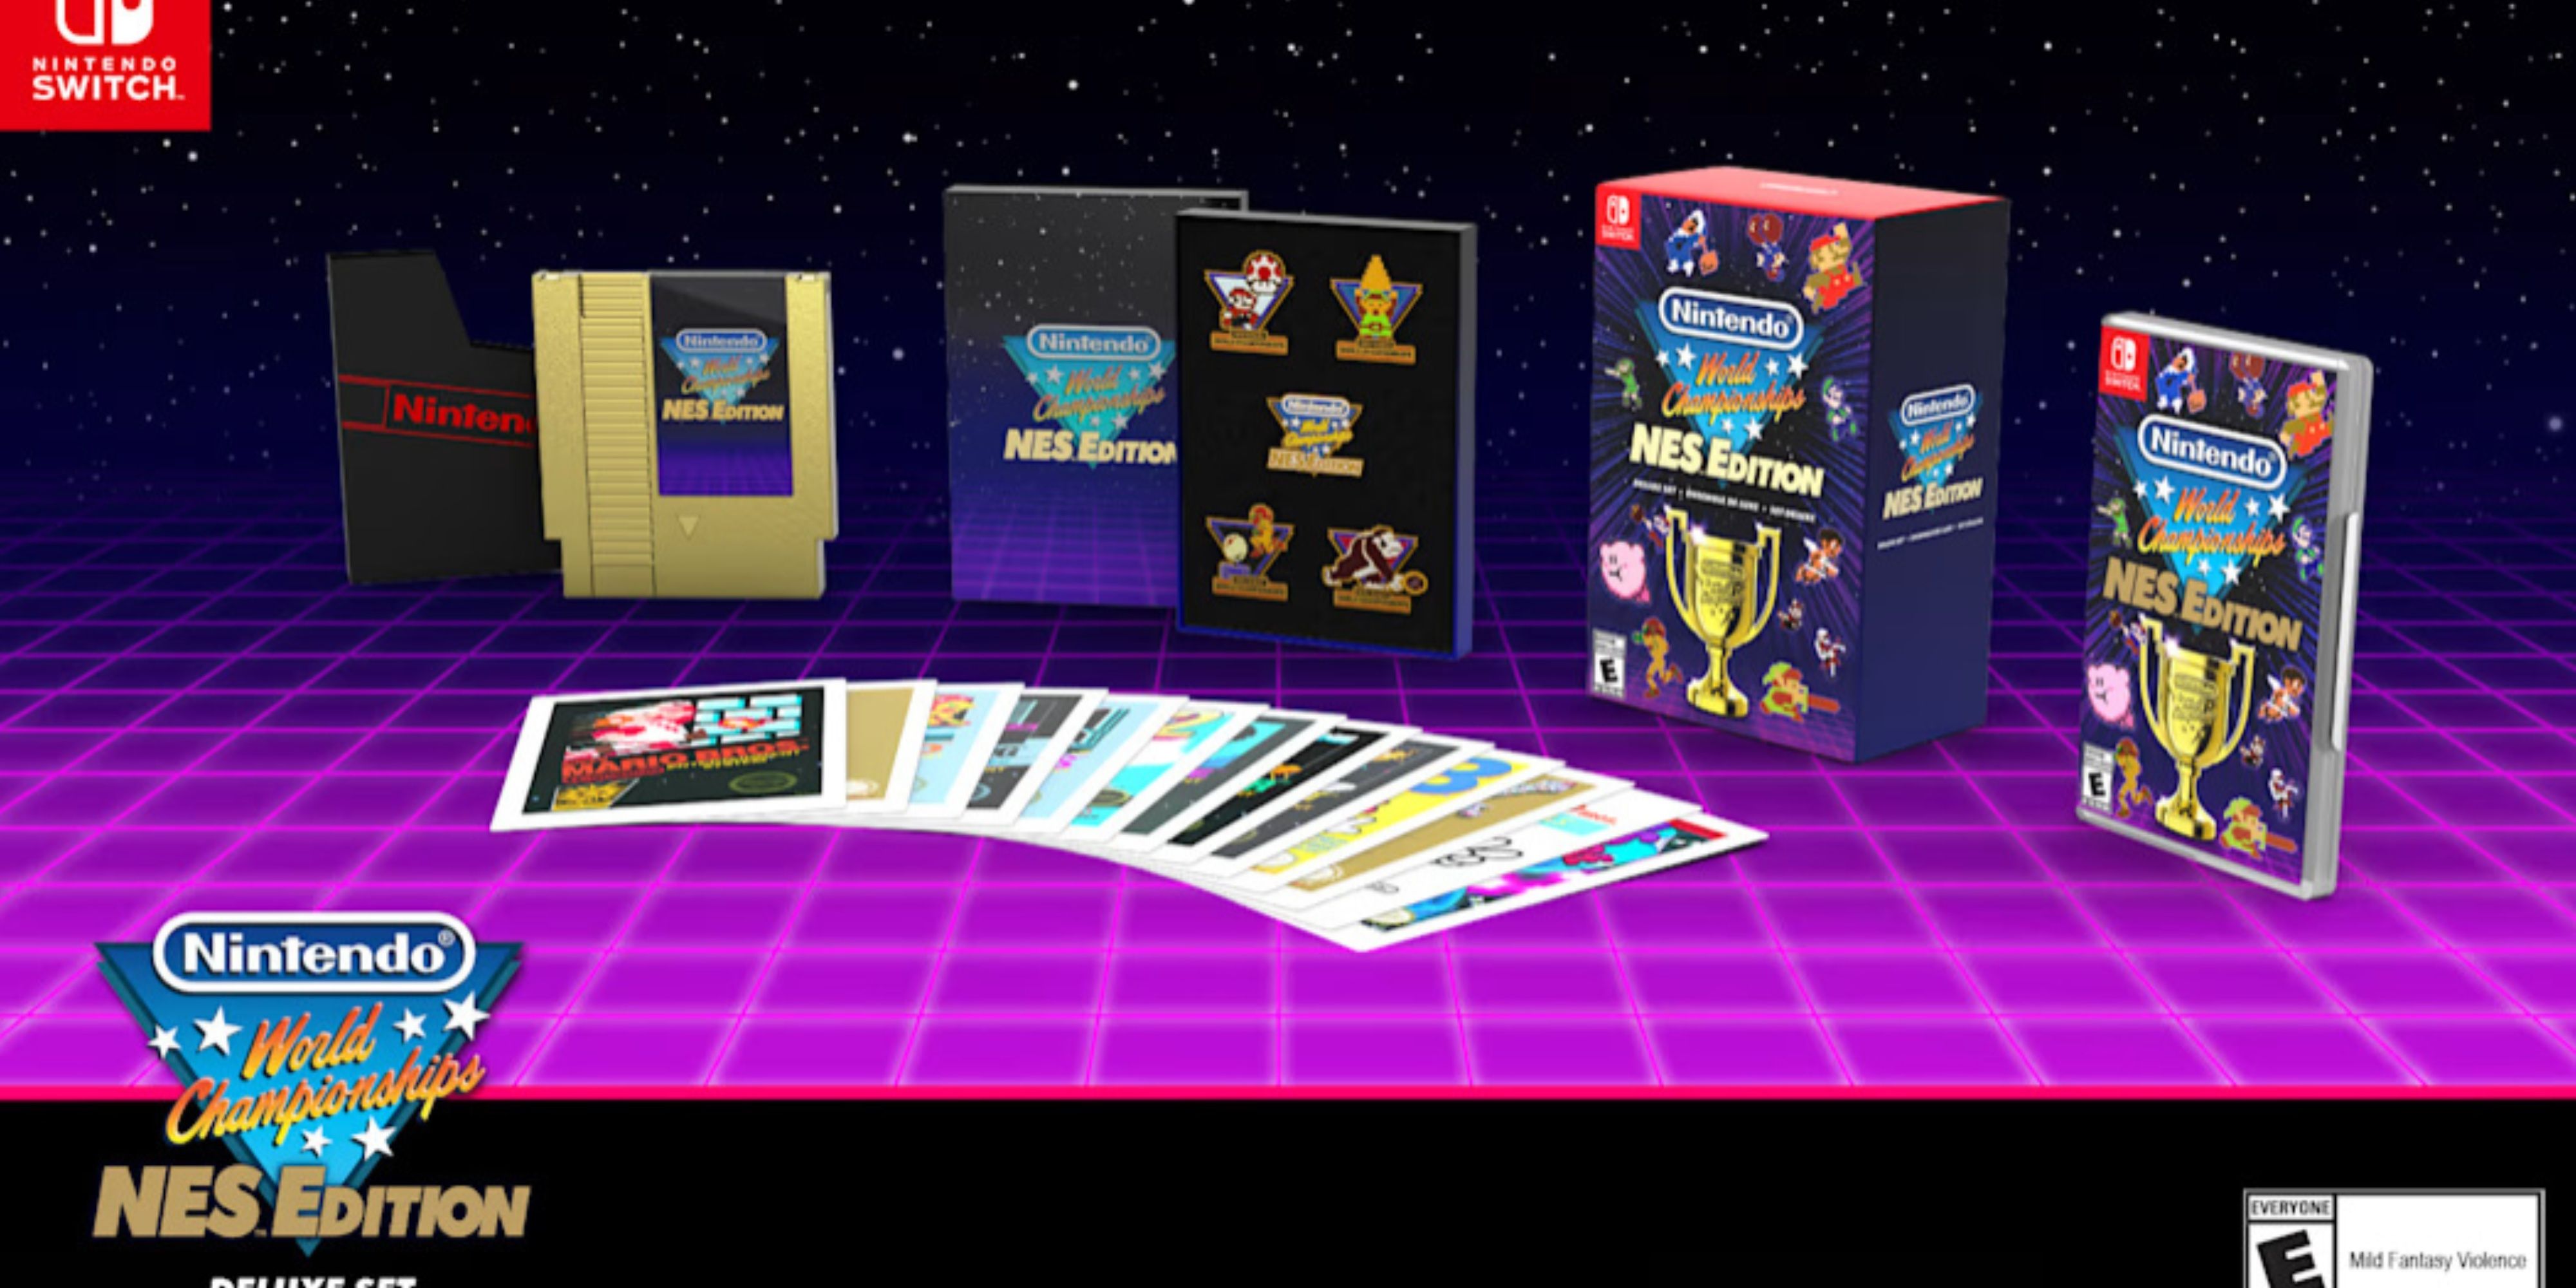 Nintendo World Championships: Руководство по предварительному заказу NES Edition